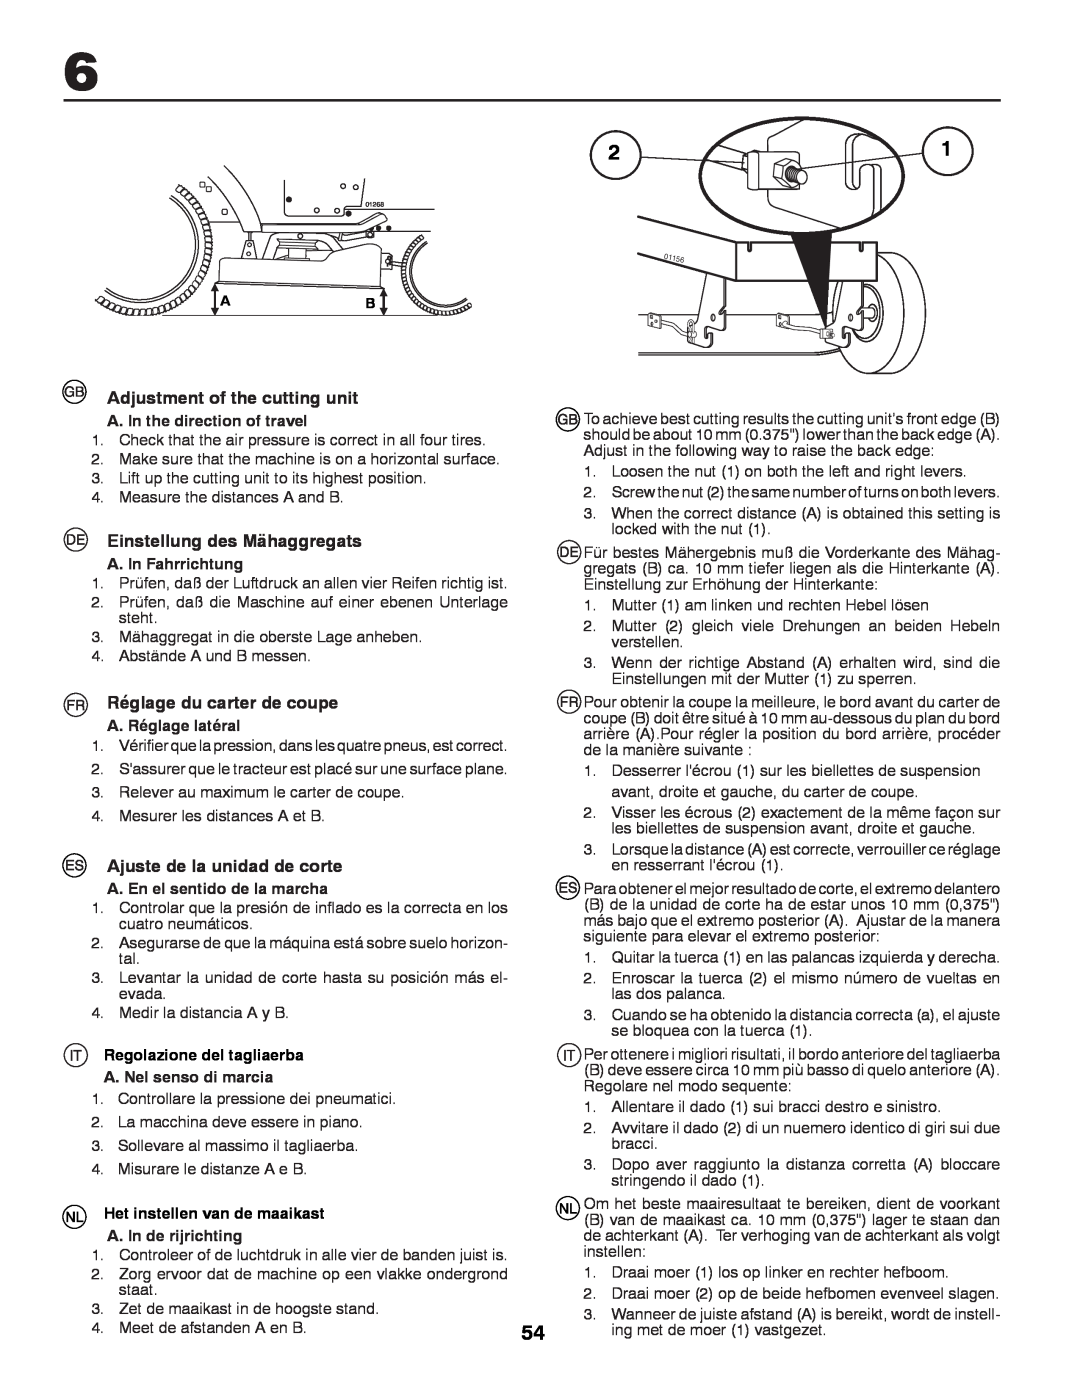 Husqvarna LT131 instruction manual Adjustment of the cutting unit, Einstellung des Mähaggregats, Réglage du carter de coupe 